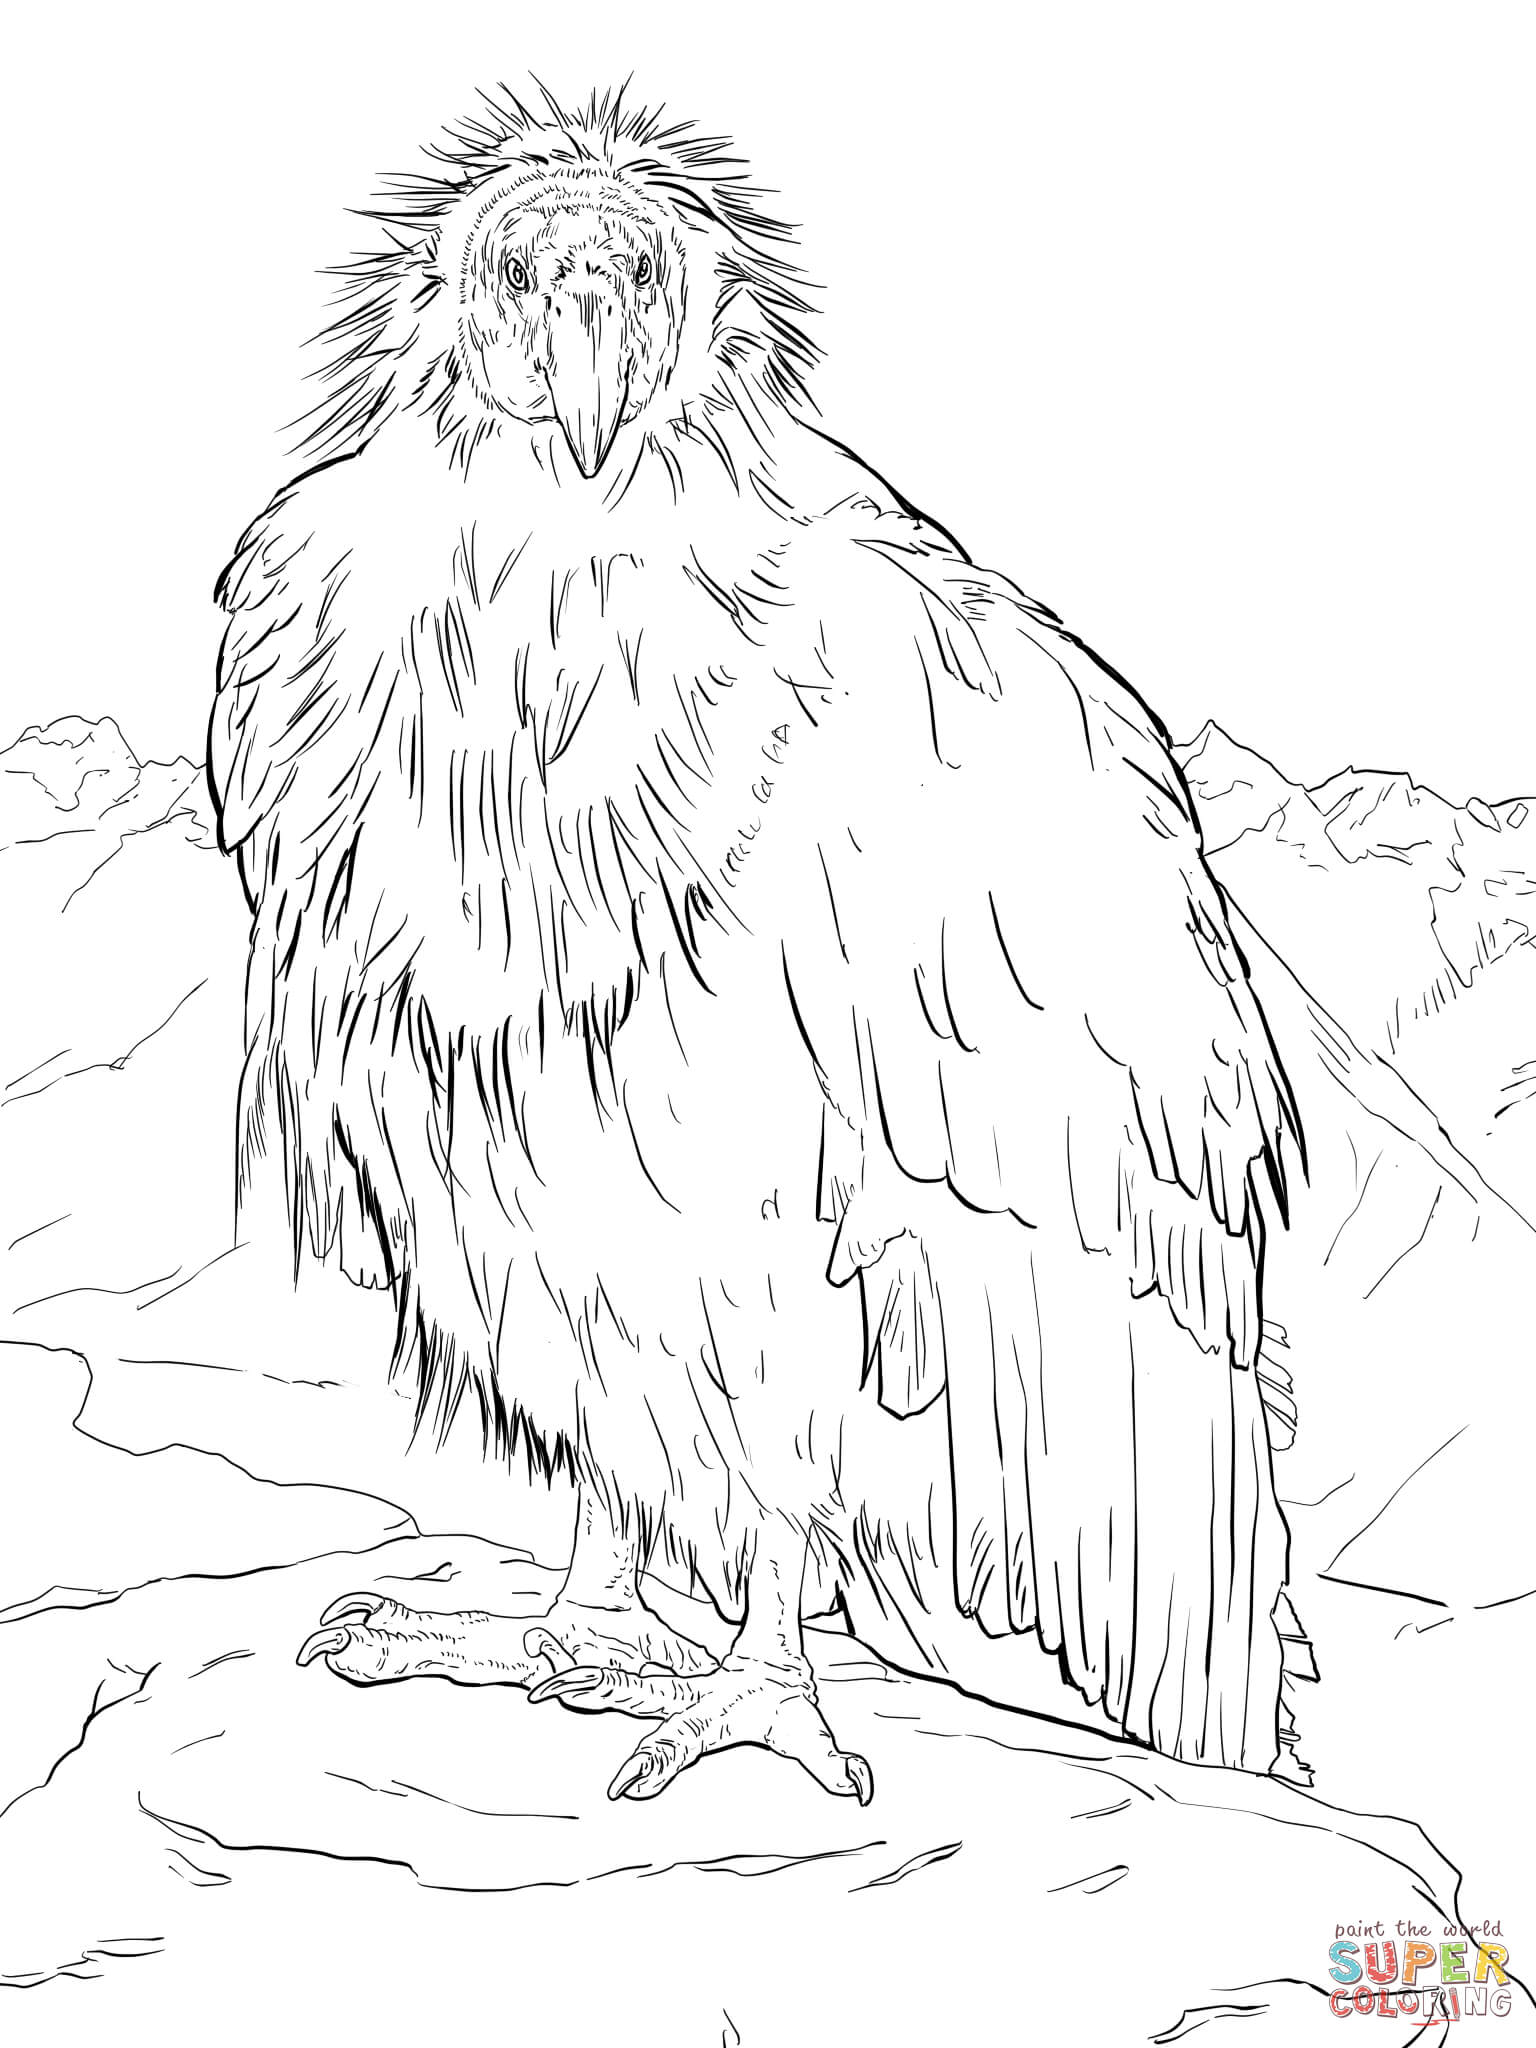 Condor coloring #2, Download drawings